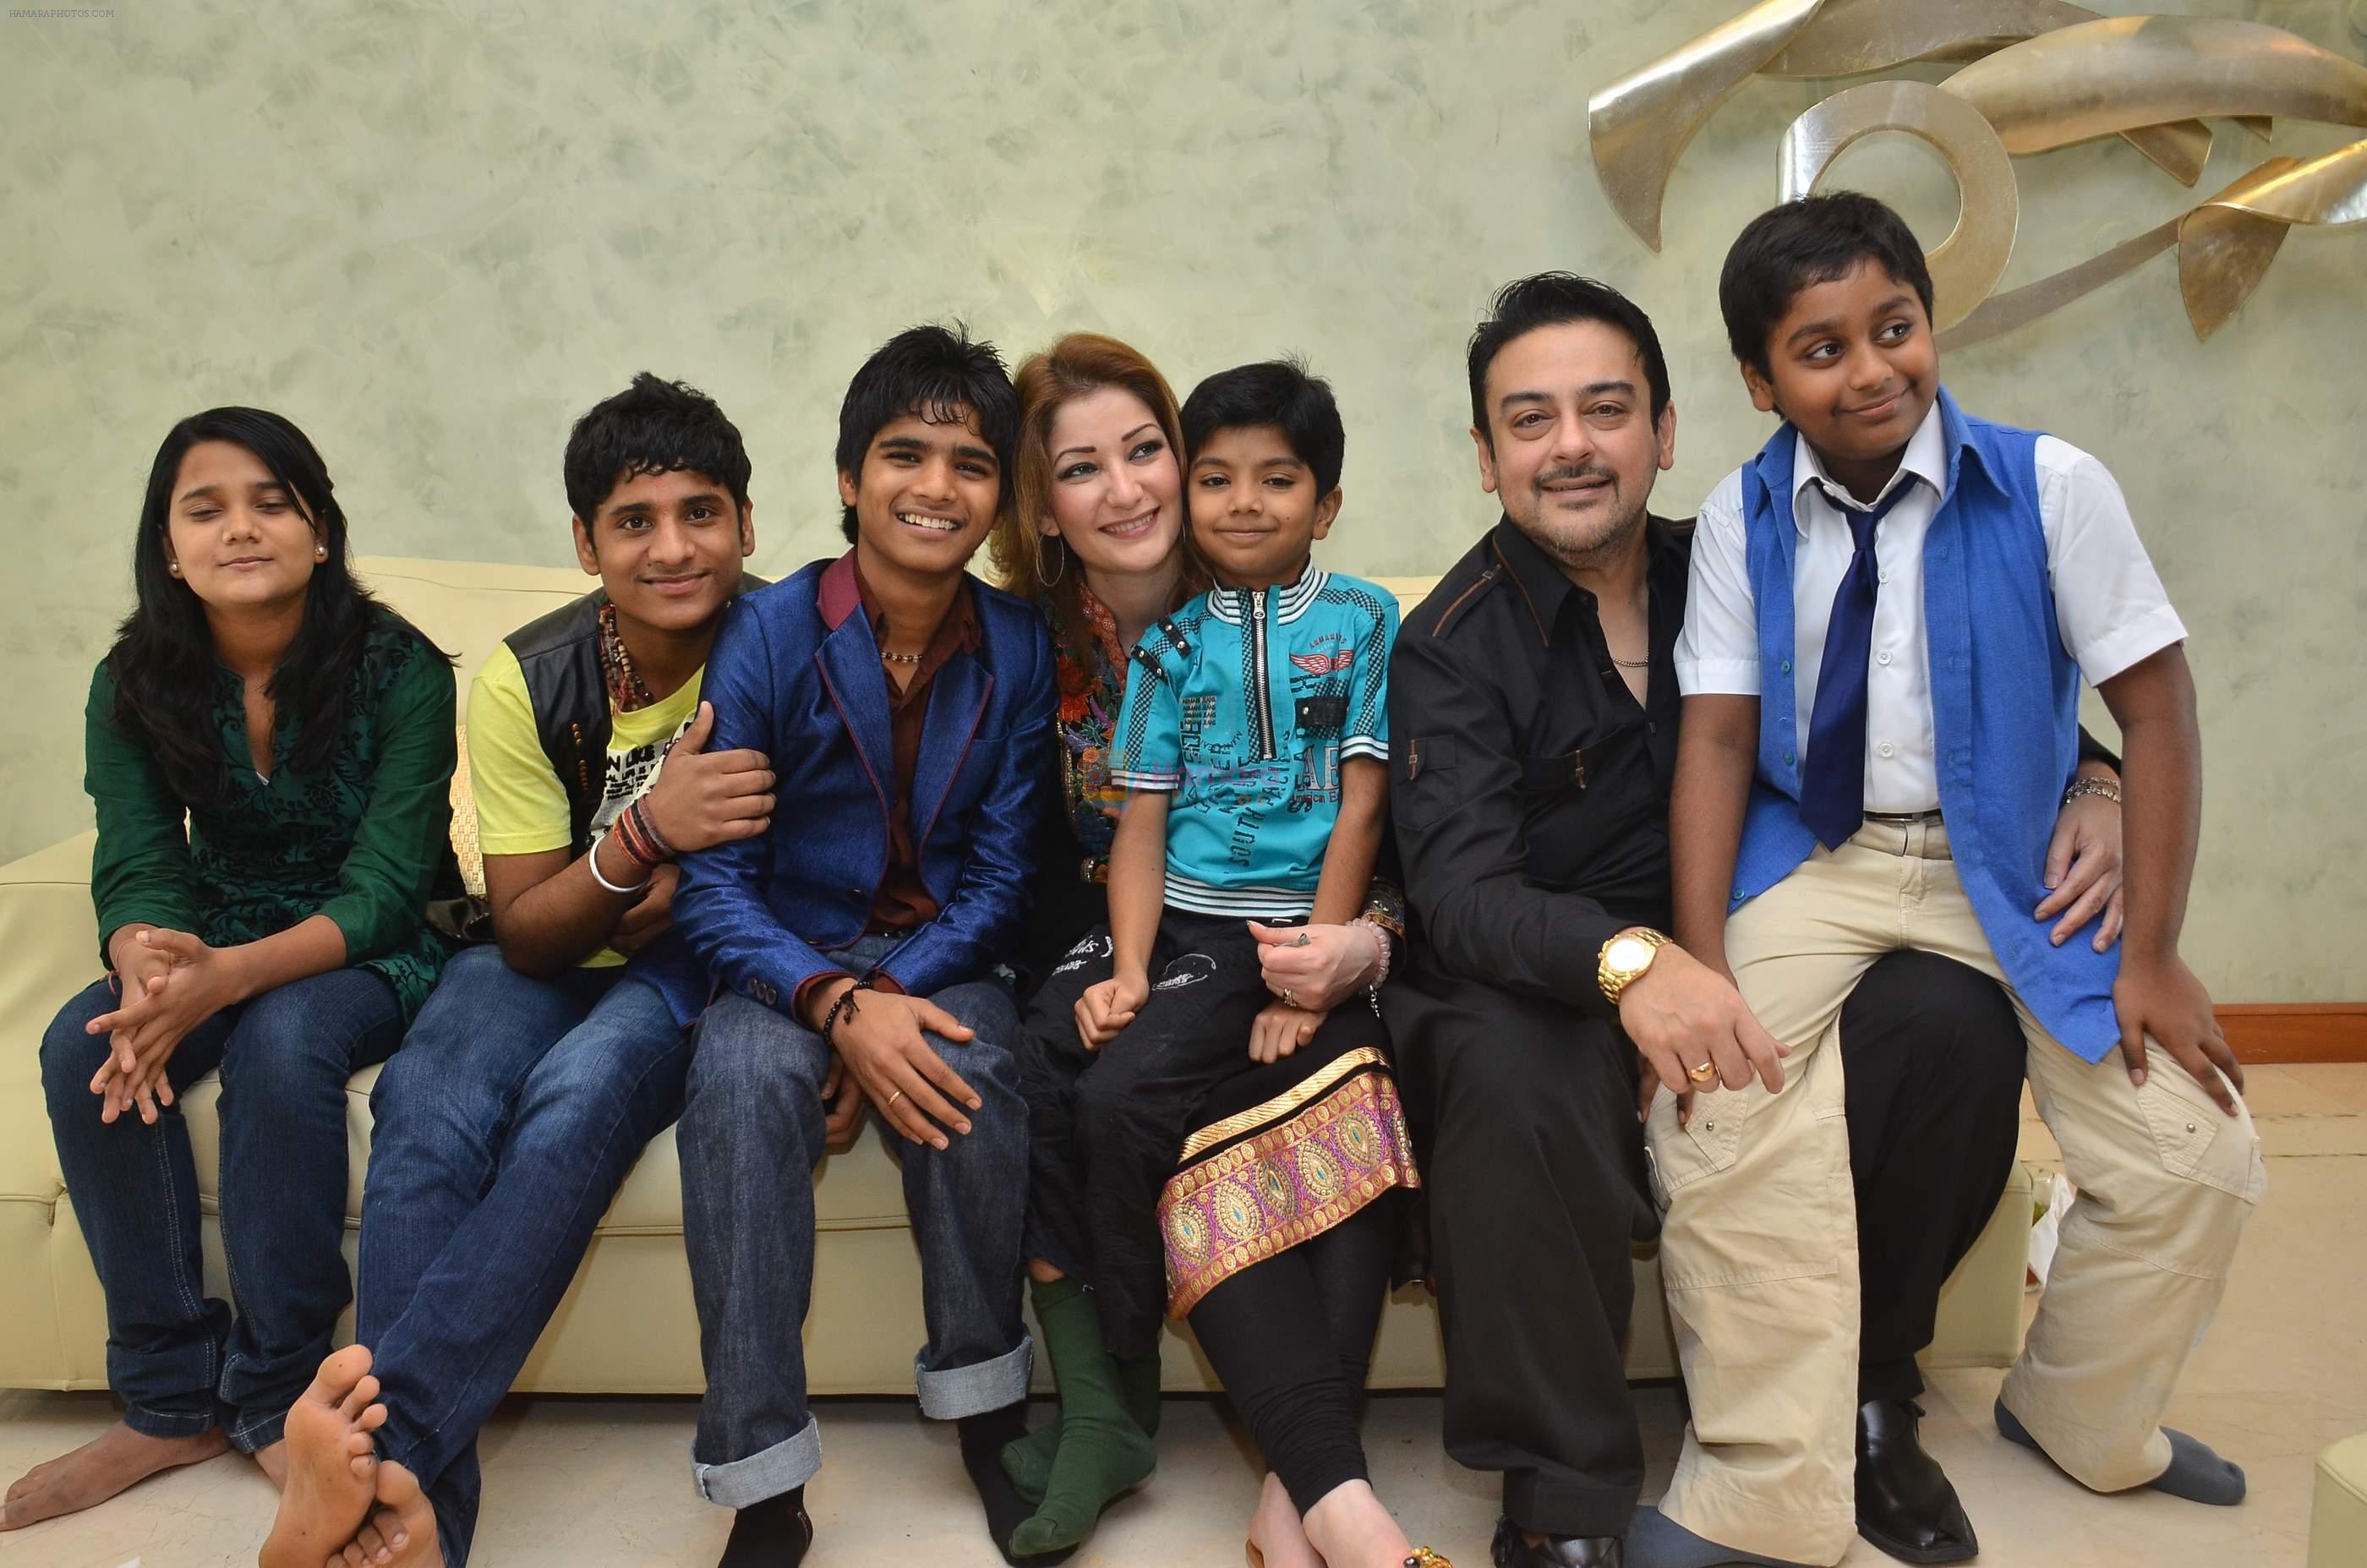 Adnan Sami celebrates eid at home with kids of SAREGAMA Lil Champs in Andheri, Mumbai on 31st Aug 2011